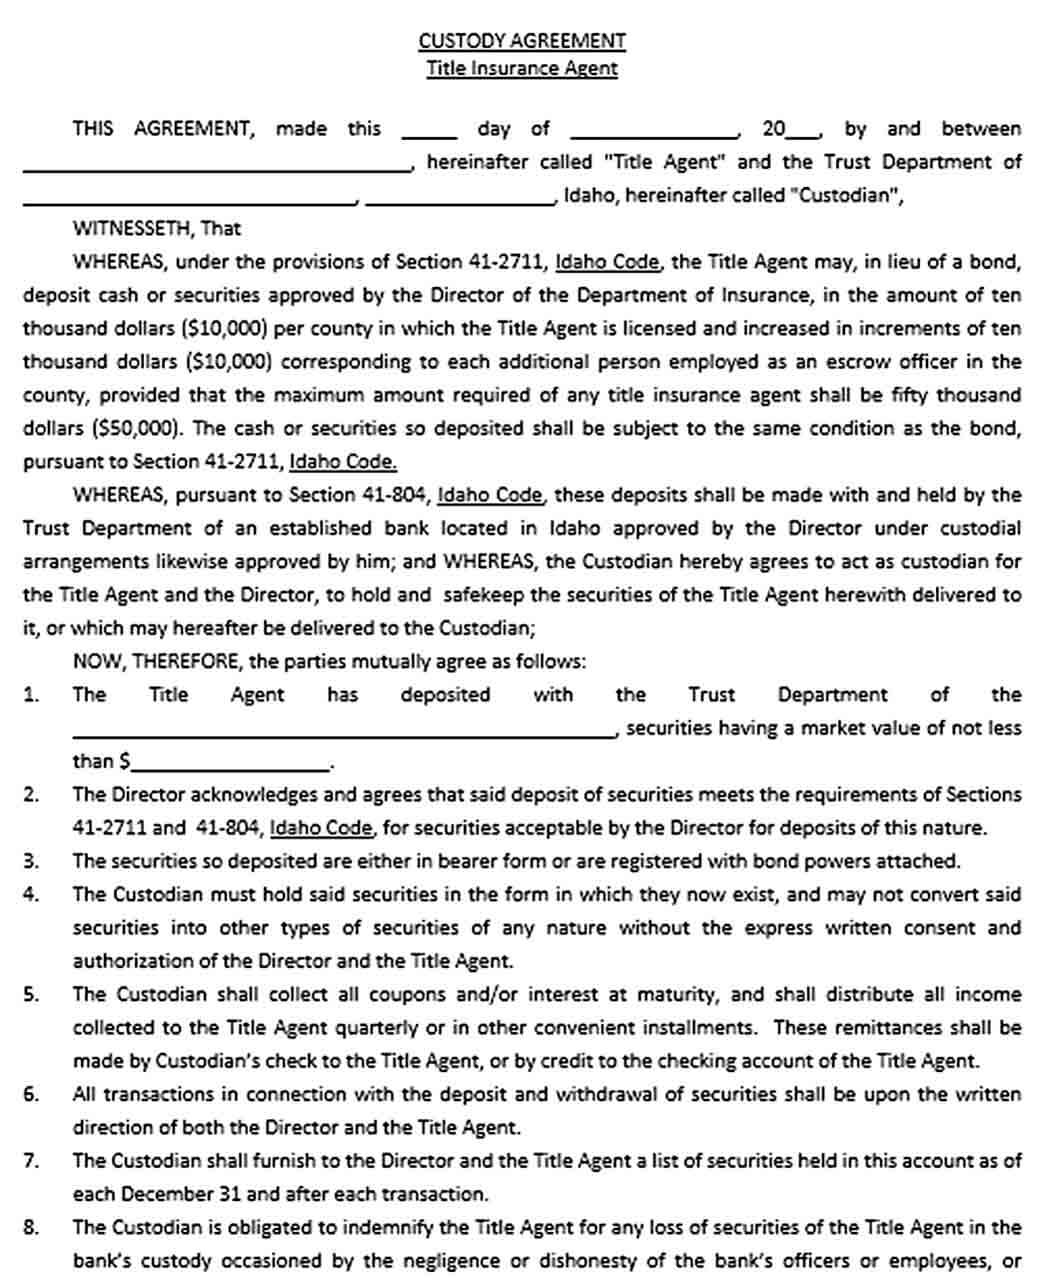 Sample Custody Agreement Document Format